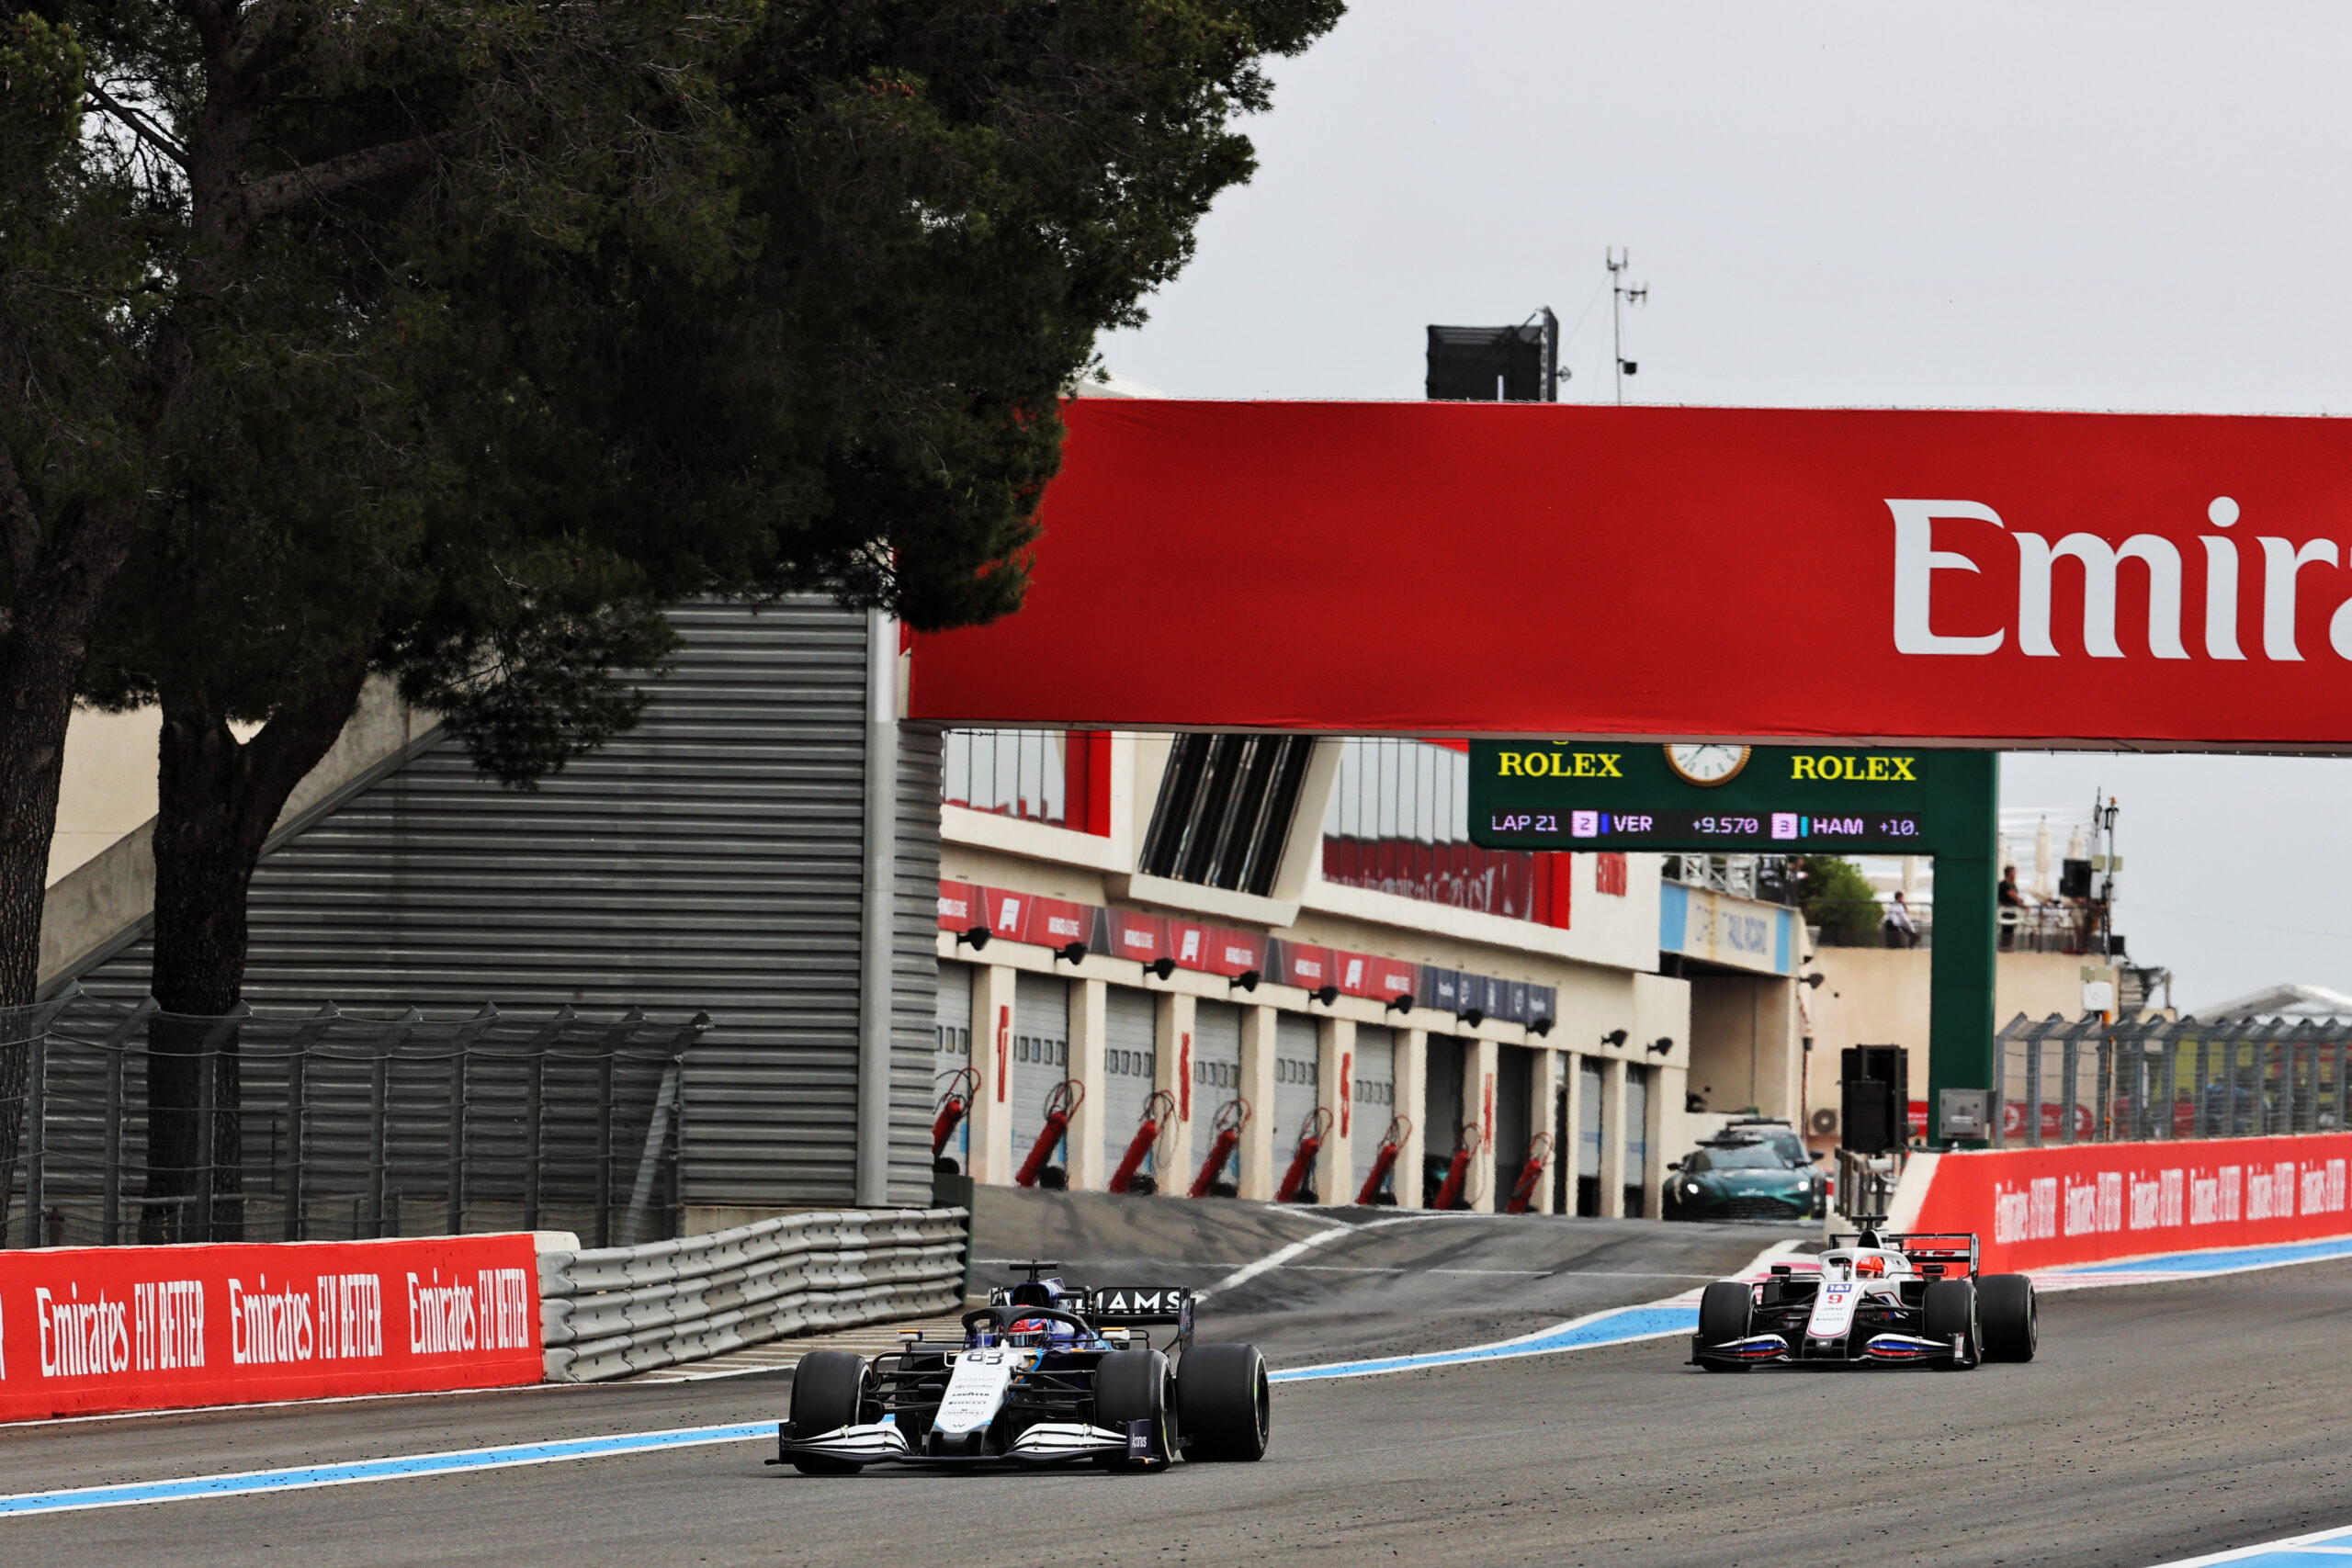 2021 Monaco Grand Prix - what the drivers said - 3Legs4Wheels